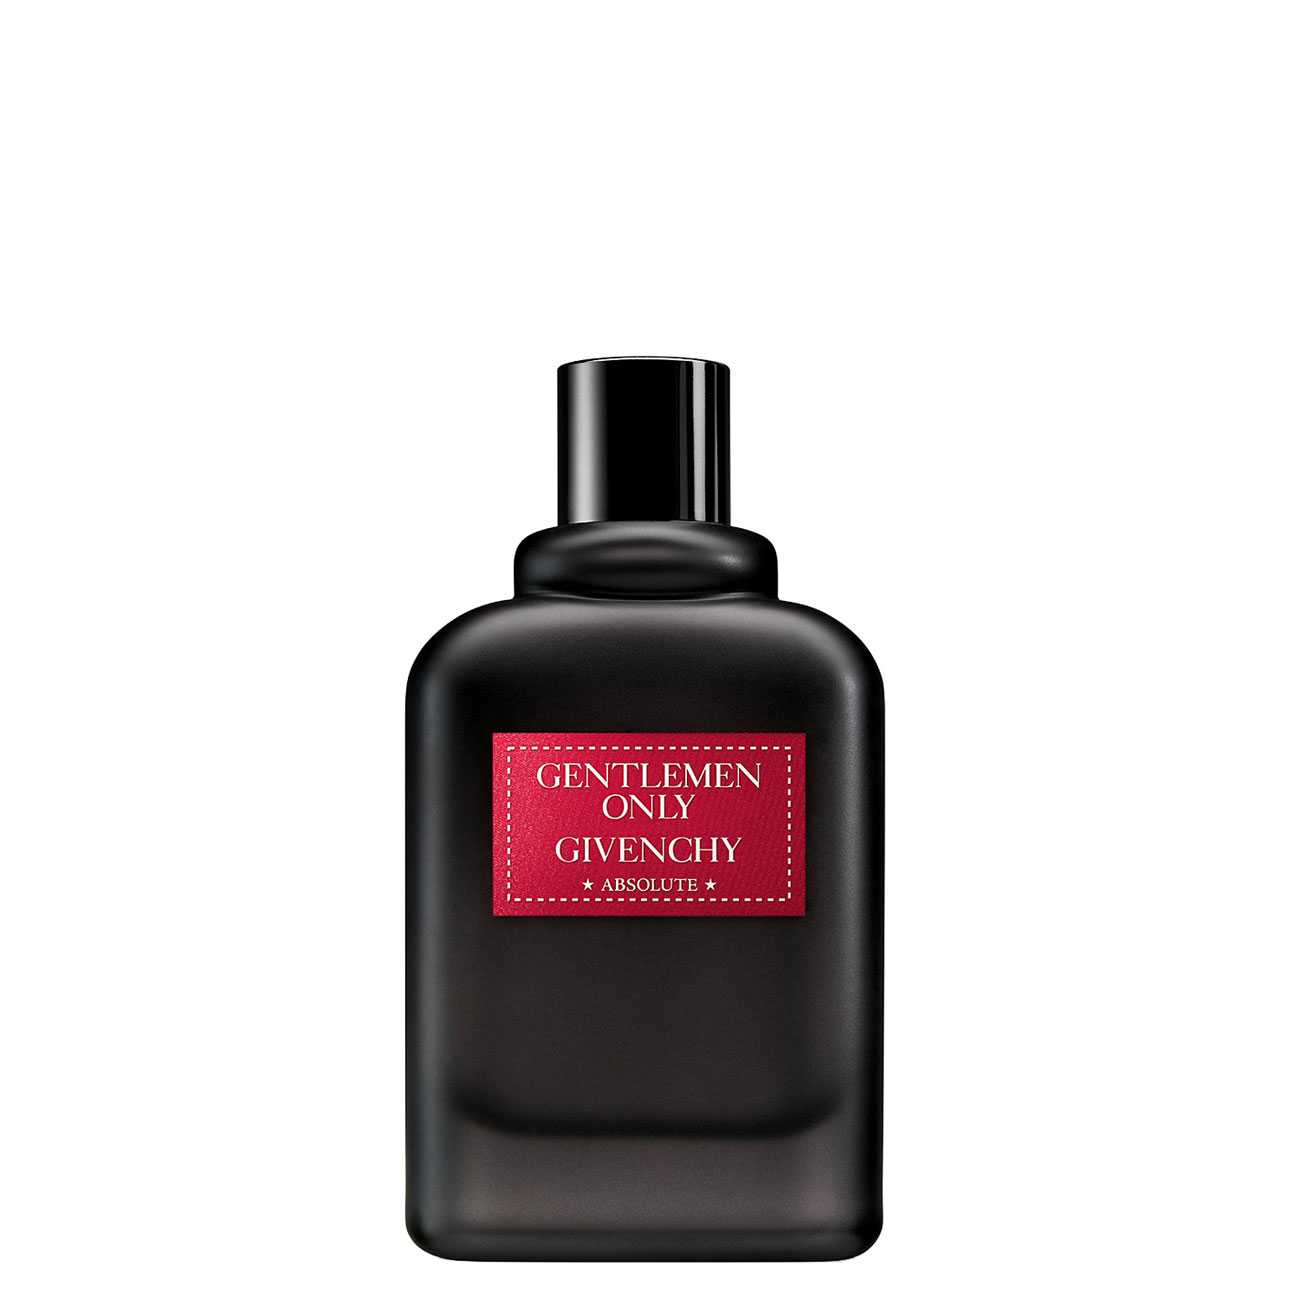 Apa de Parfum Givenchy GENTLEMEN ONLY ABSOLUTE 50ml cu comanda online